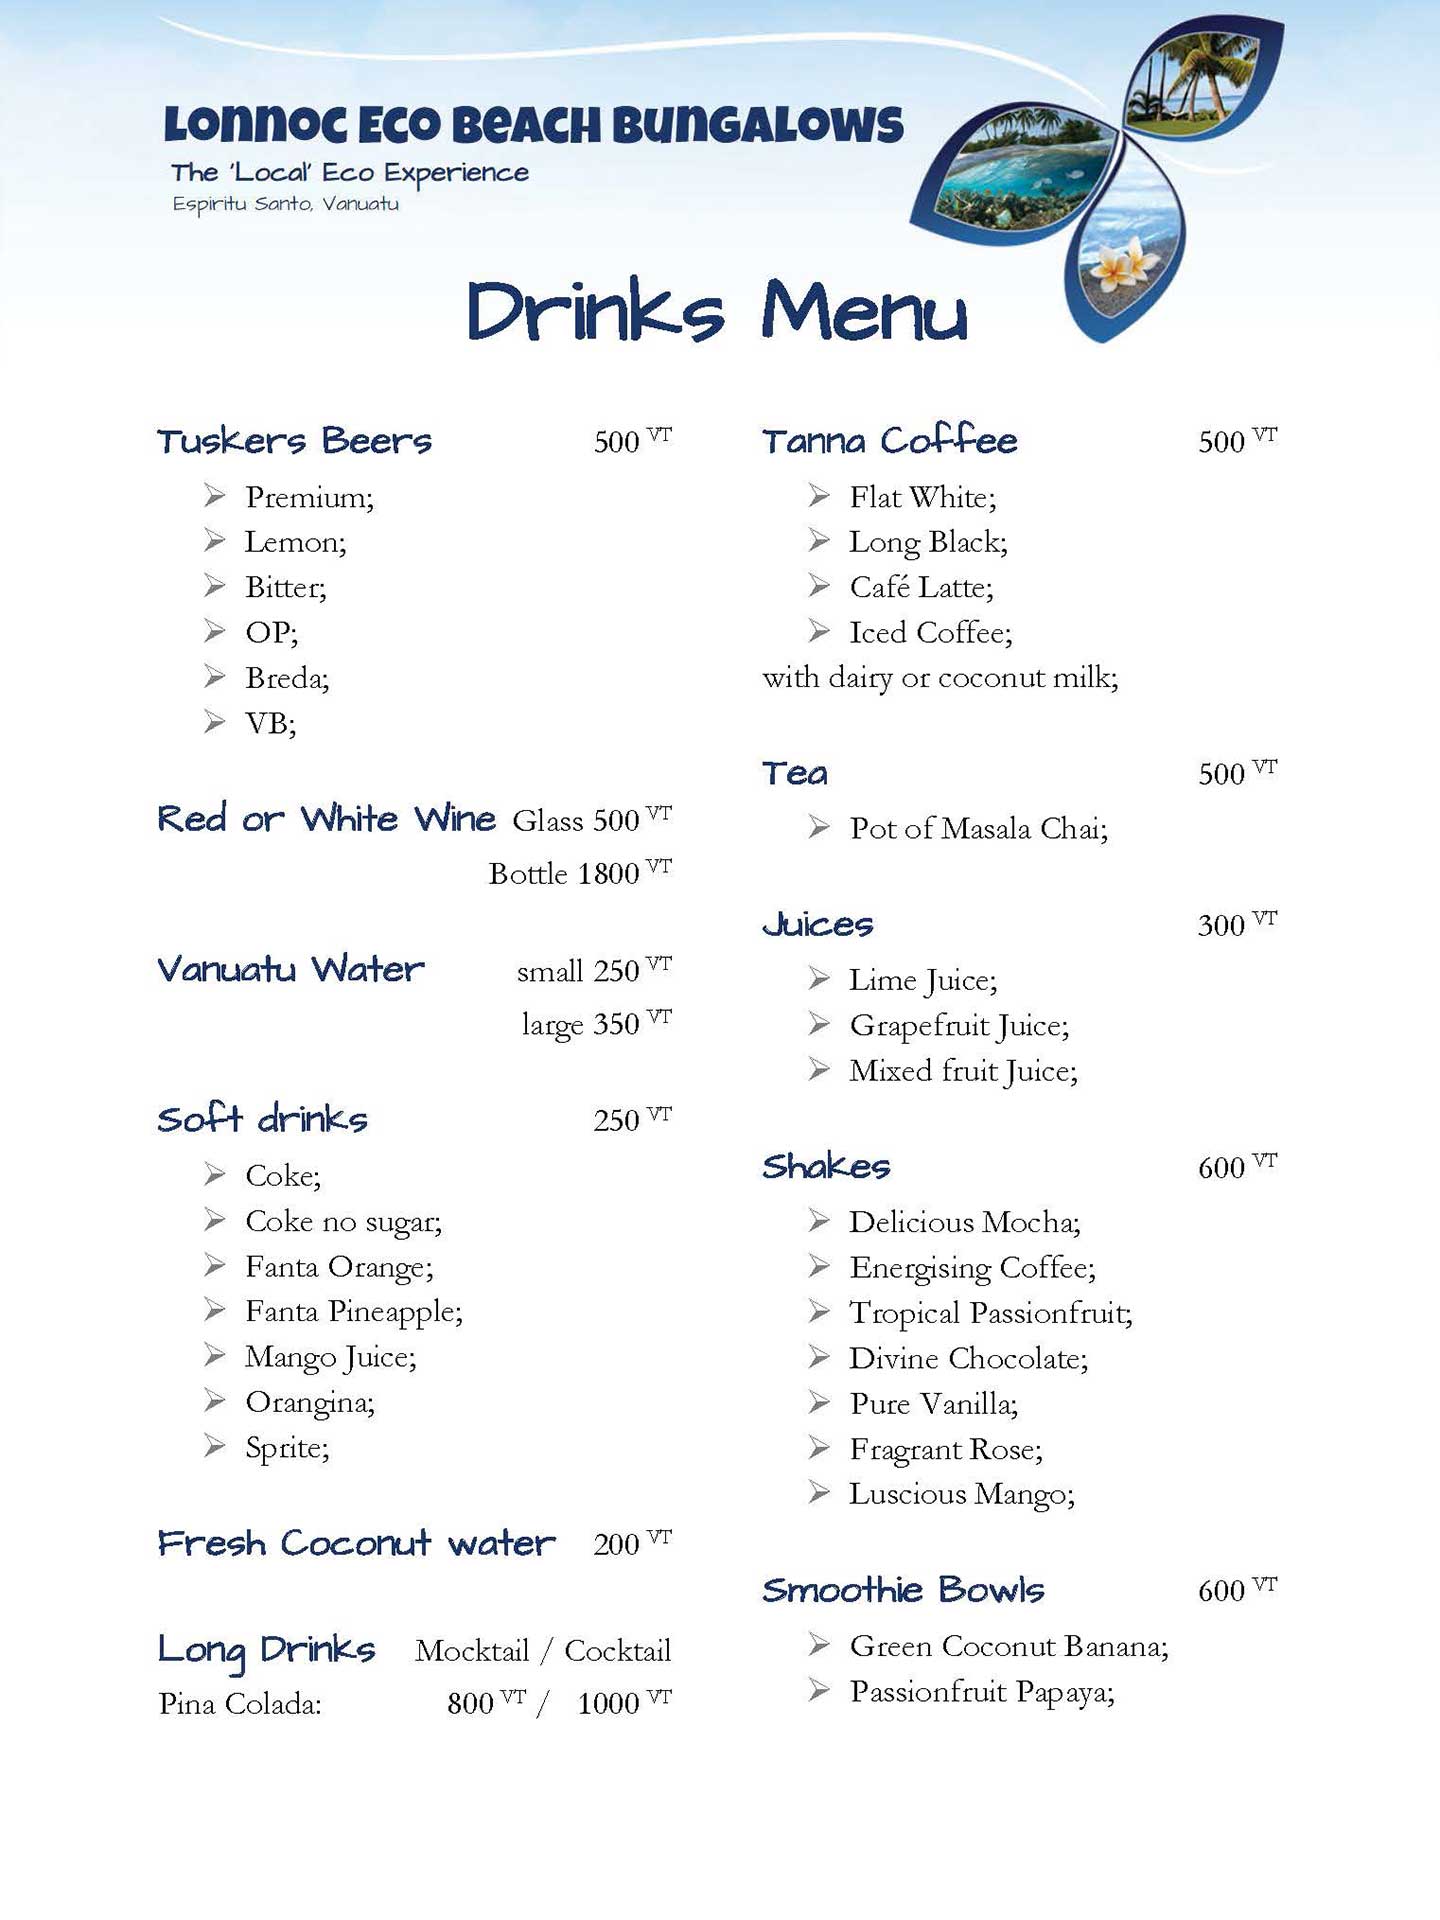 Drinks menu - Lonnoc Eco Beach Bunganlows